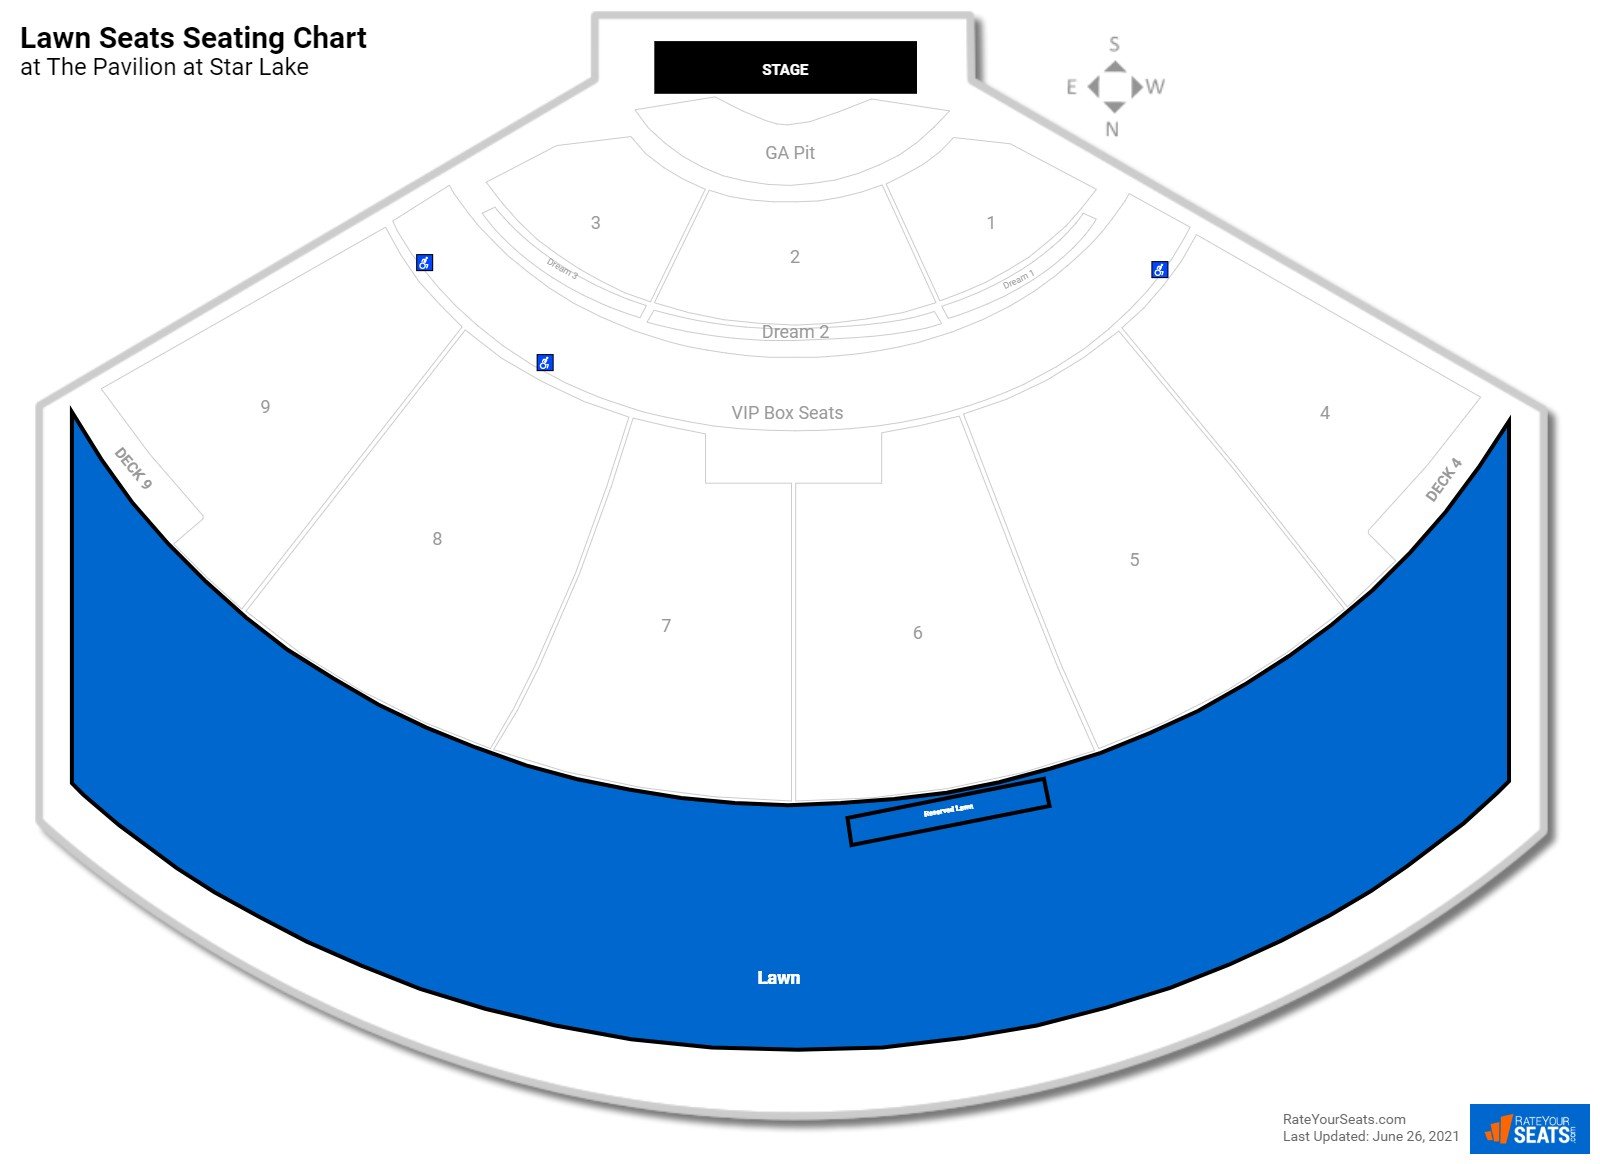 Concert Lawn Seats Seating Chart at The Pavilion at Star Lake